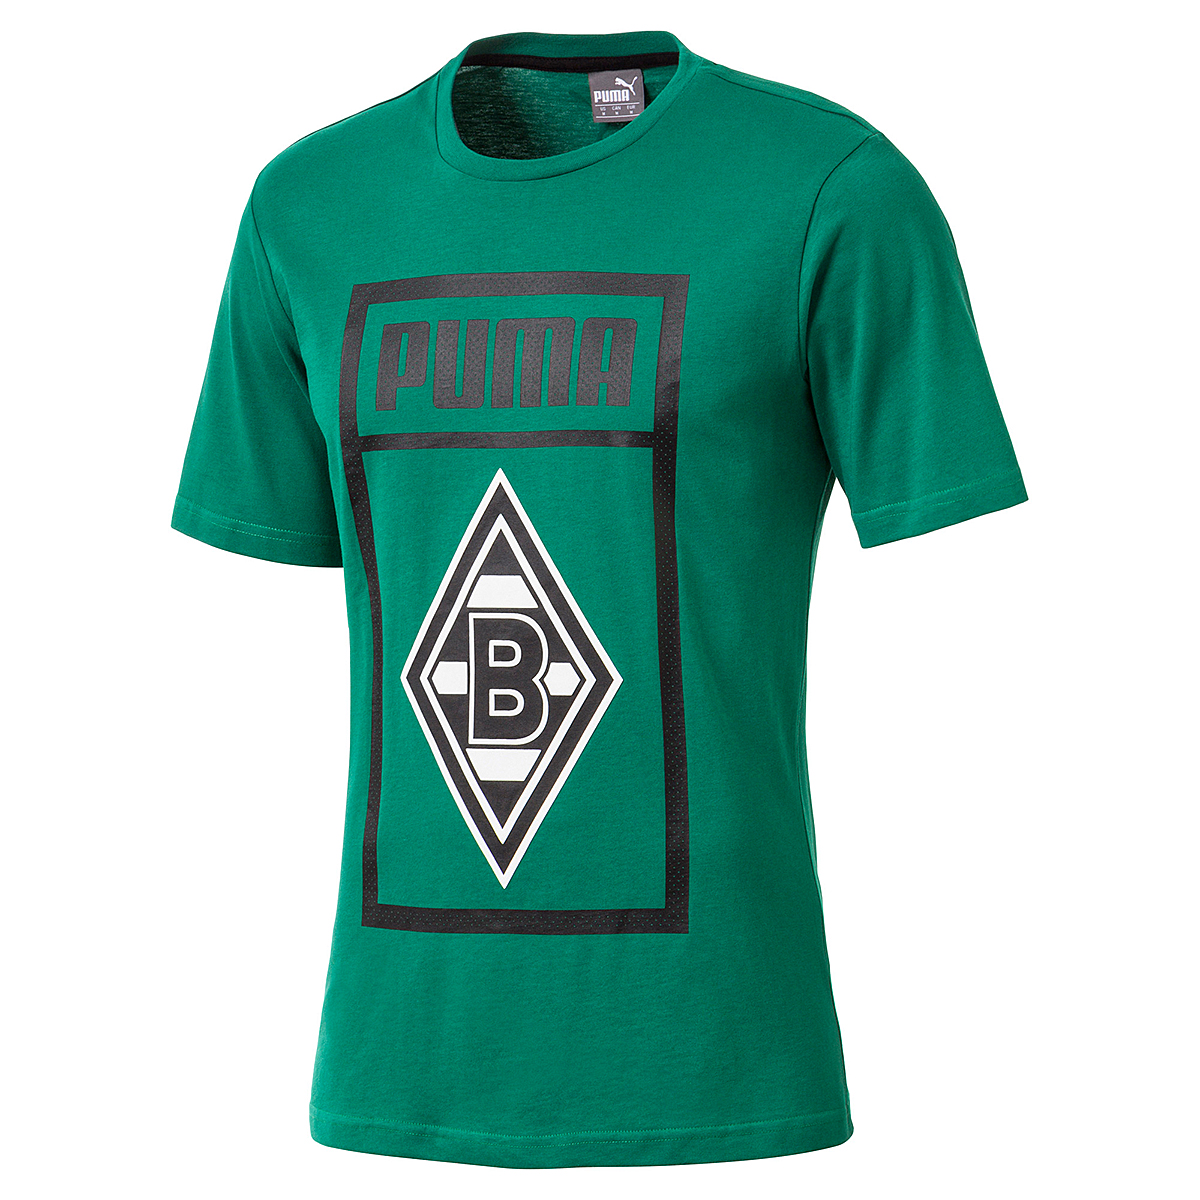 Puma BMG Shoe Tag Tee T-Shirt Herren Borussia Mönchengladbach grün 754164 02